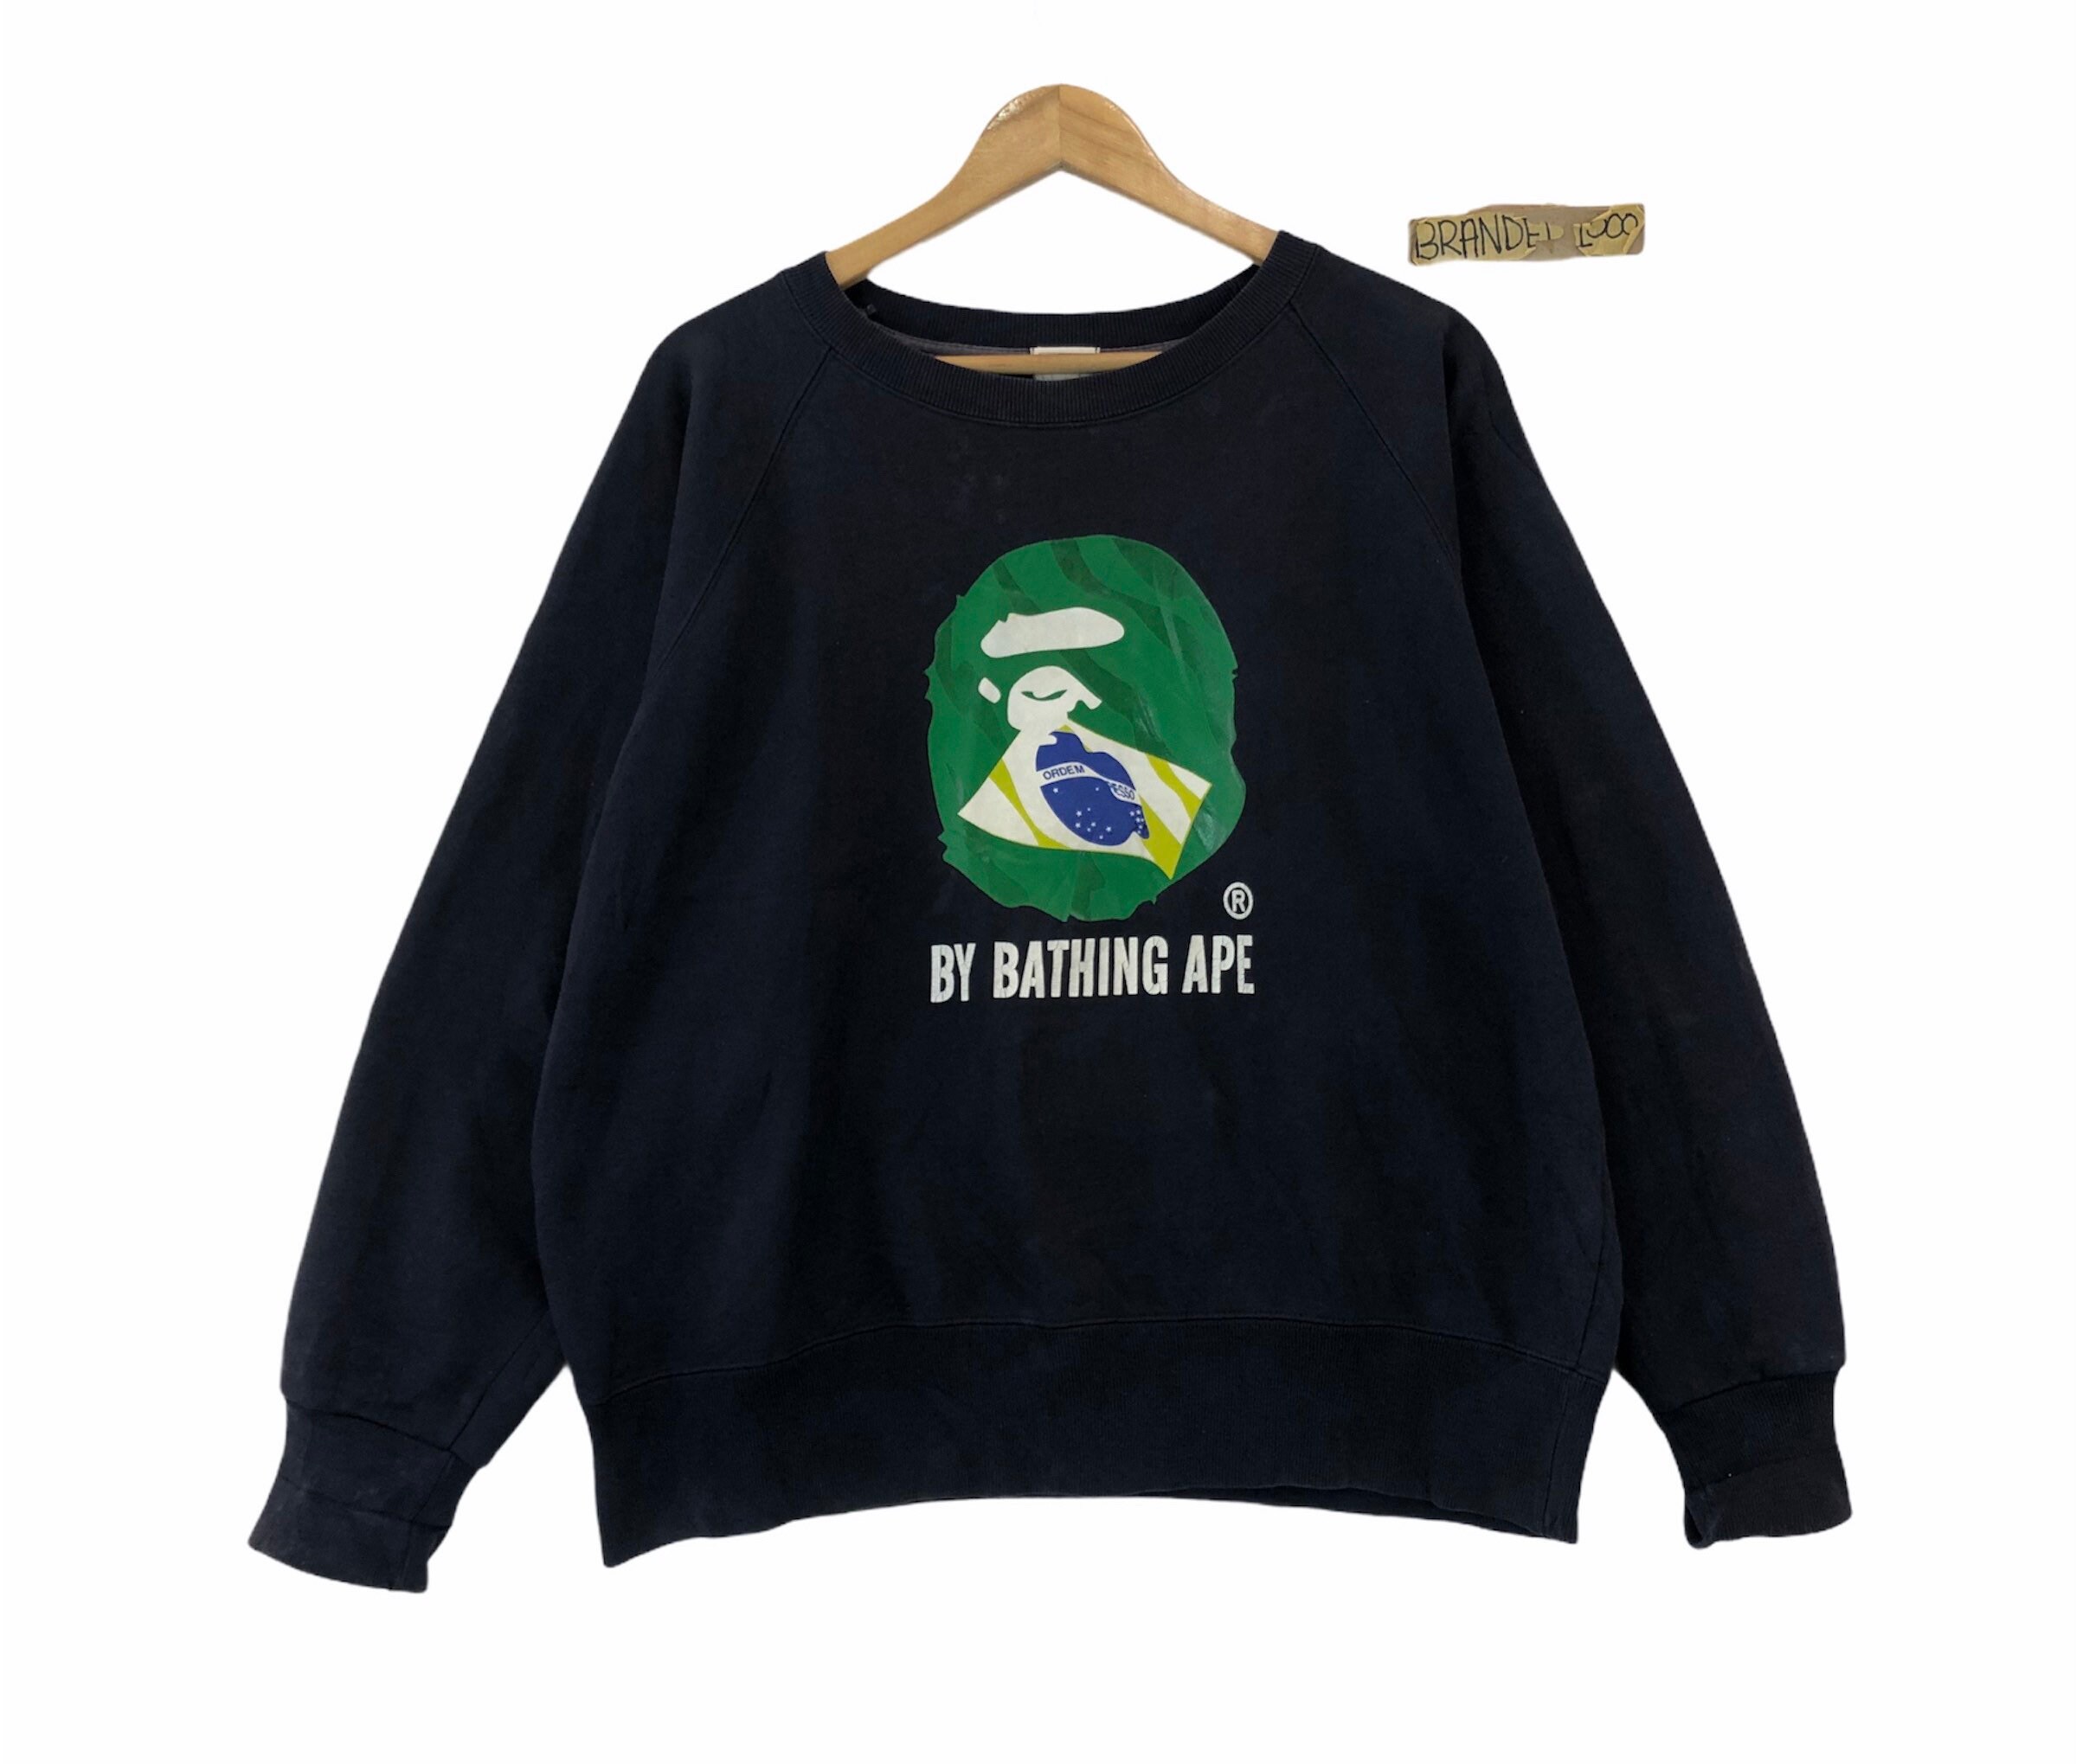 Kleding Gender-neutrale kleding volwassenen Hoodies & Sweatshirts Sweatshirts Baby Milo Store door A Bathing Ape Crewneck Brown Size M 